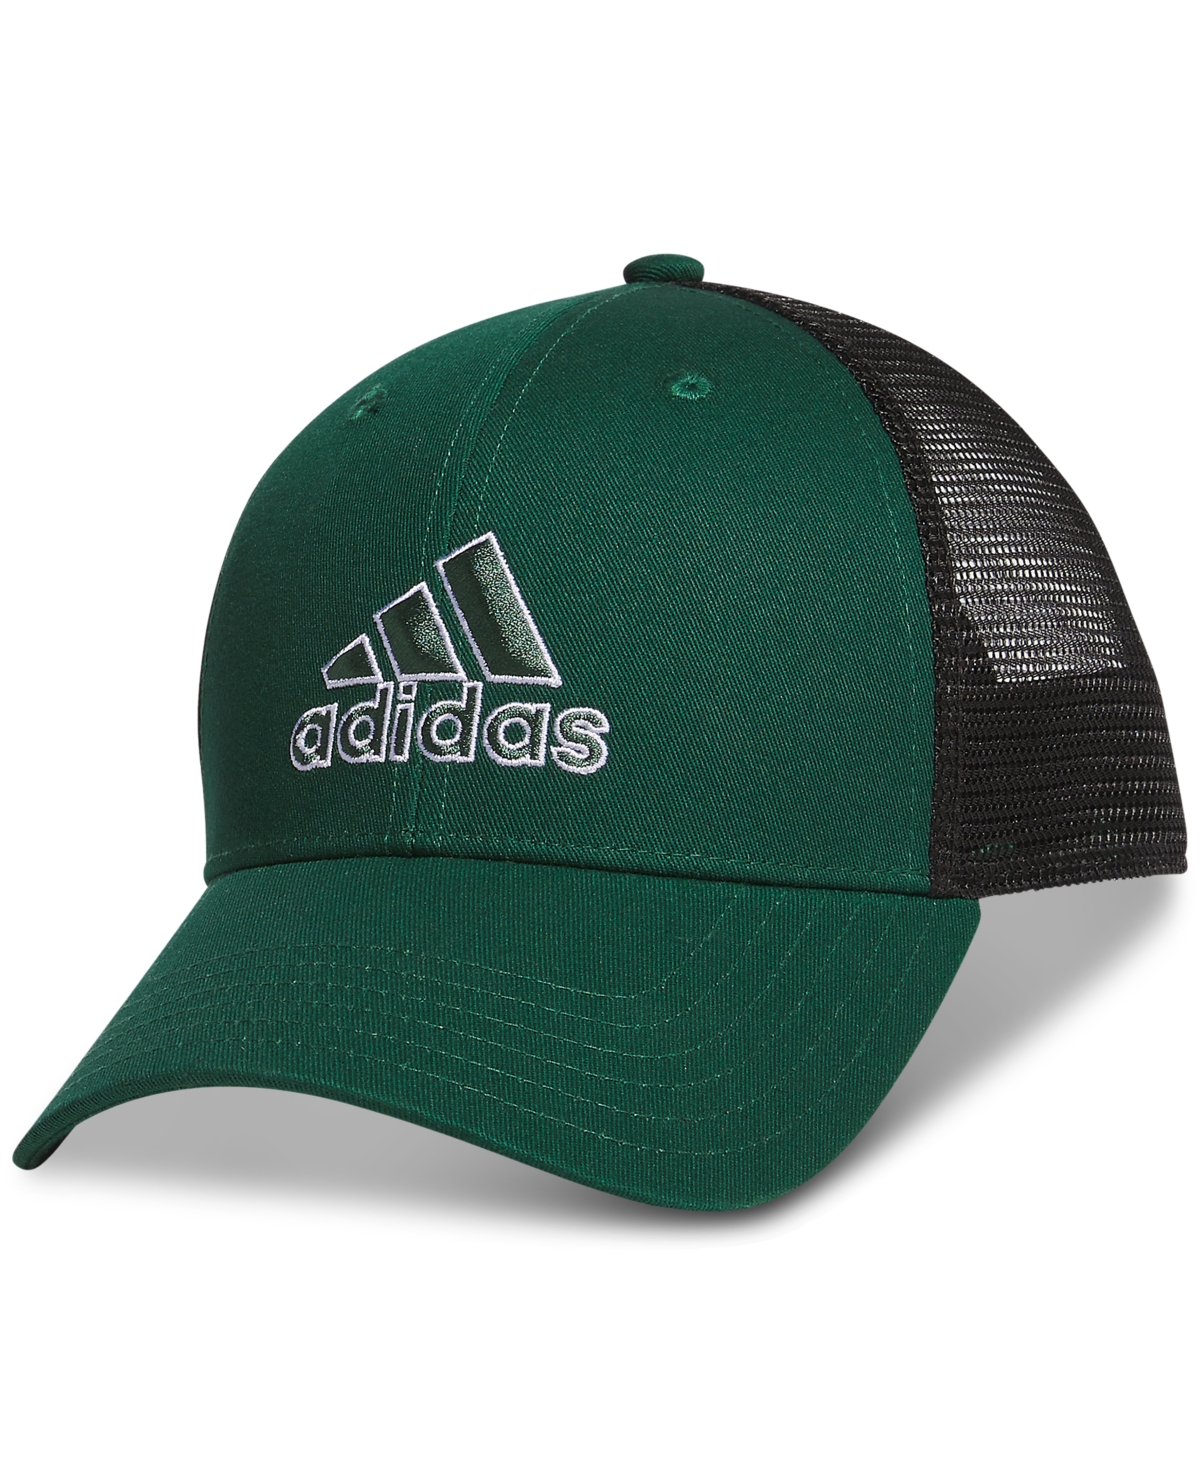 Adidas Originals Men's Structured Mesh Snapback Hat In Collegiate Green,black,white